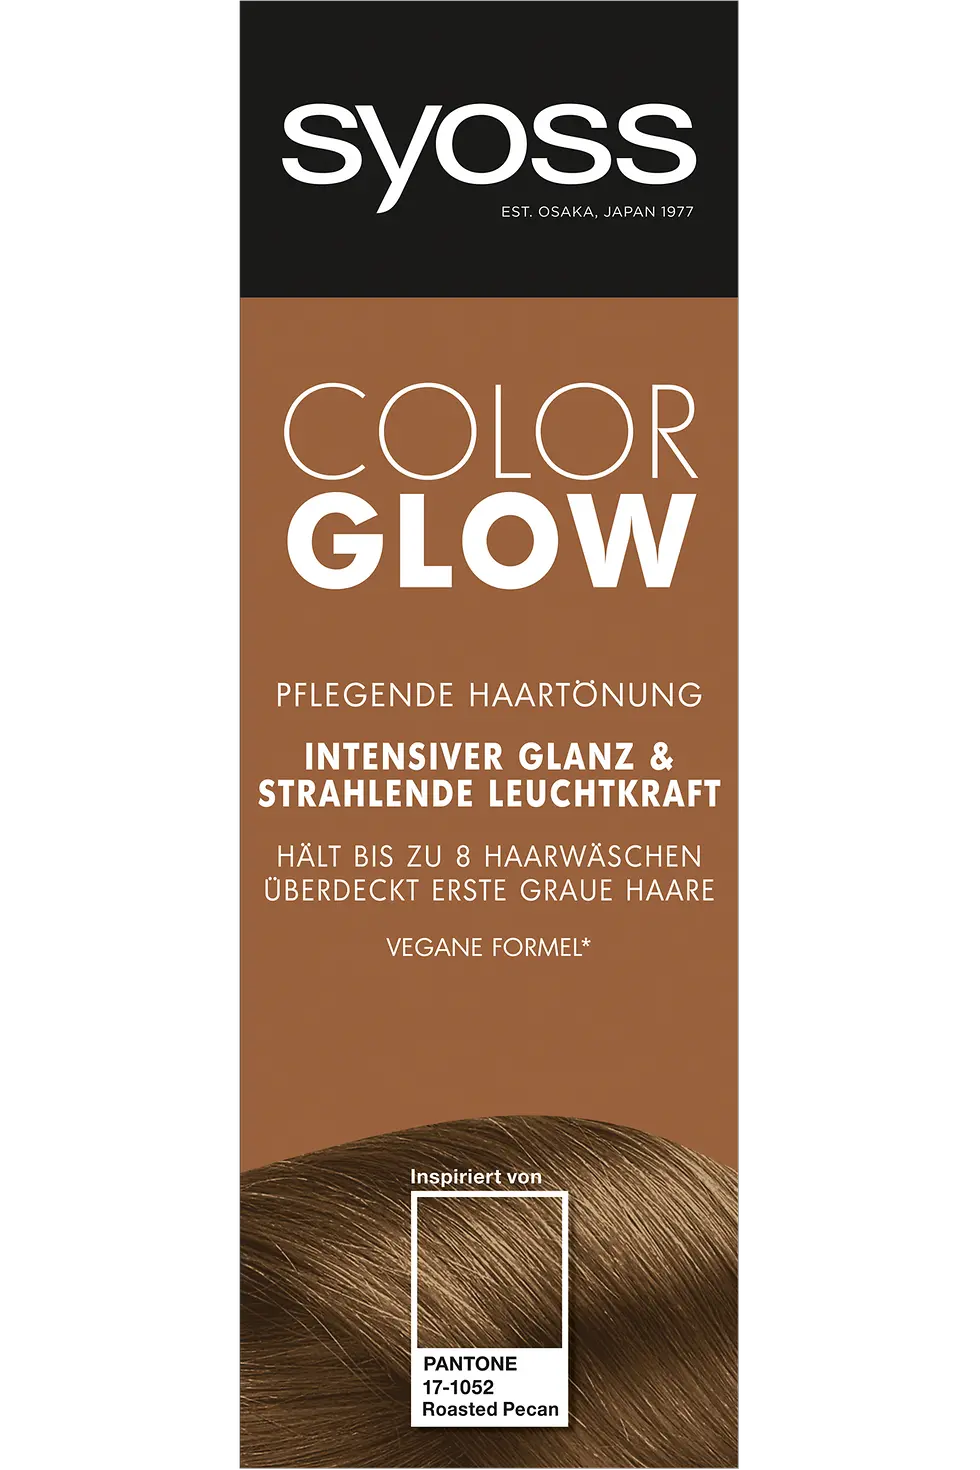 Syoss Inspired by Pantone Color Glow, PANTONE 17-1052 Roasted Pecan